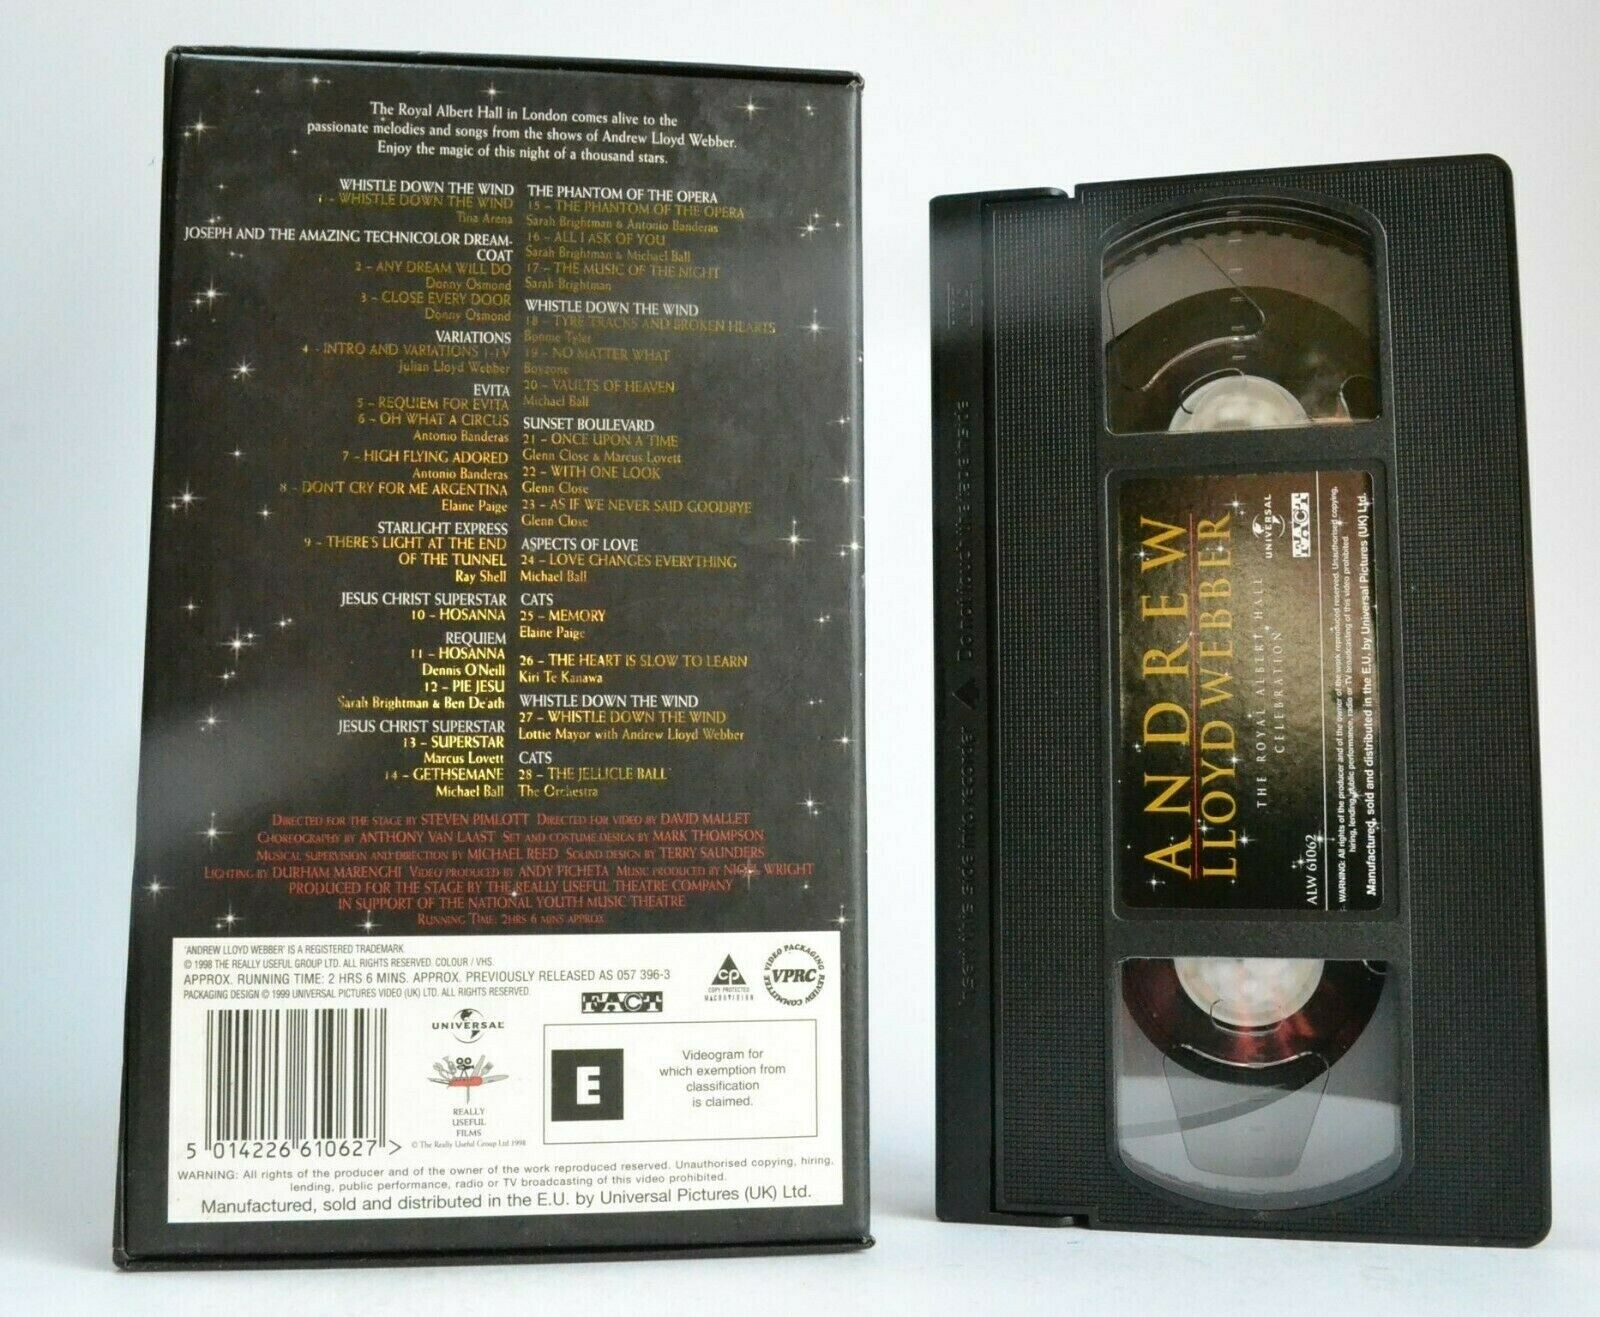 Andrew Lloyd Webber: The Royal Albert Hall Celebration - Evita - Cats - Pal VHS-